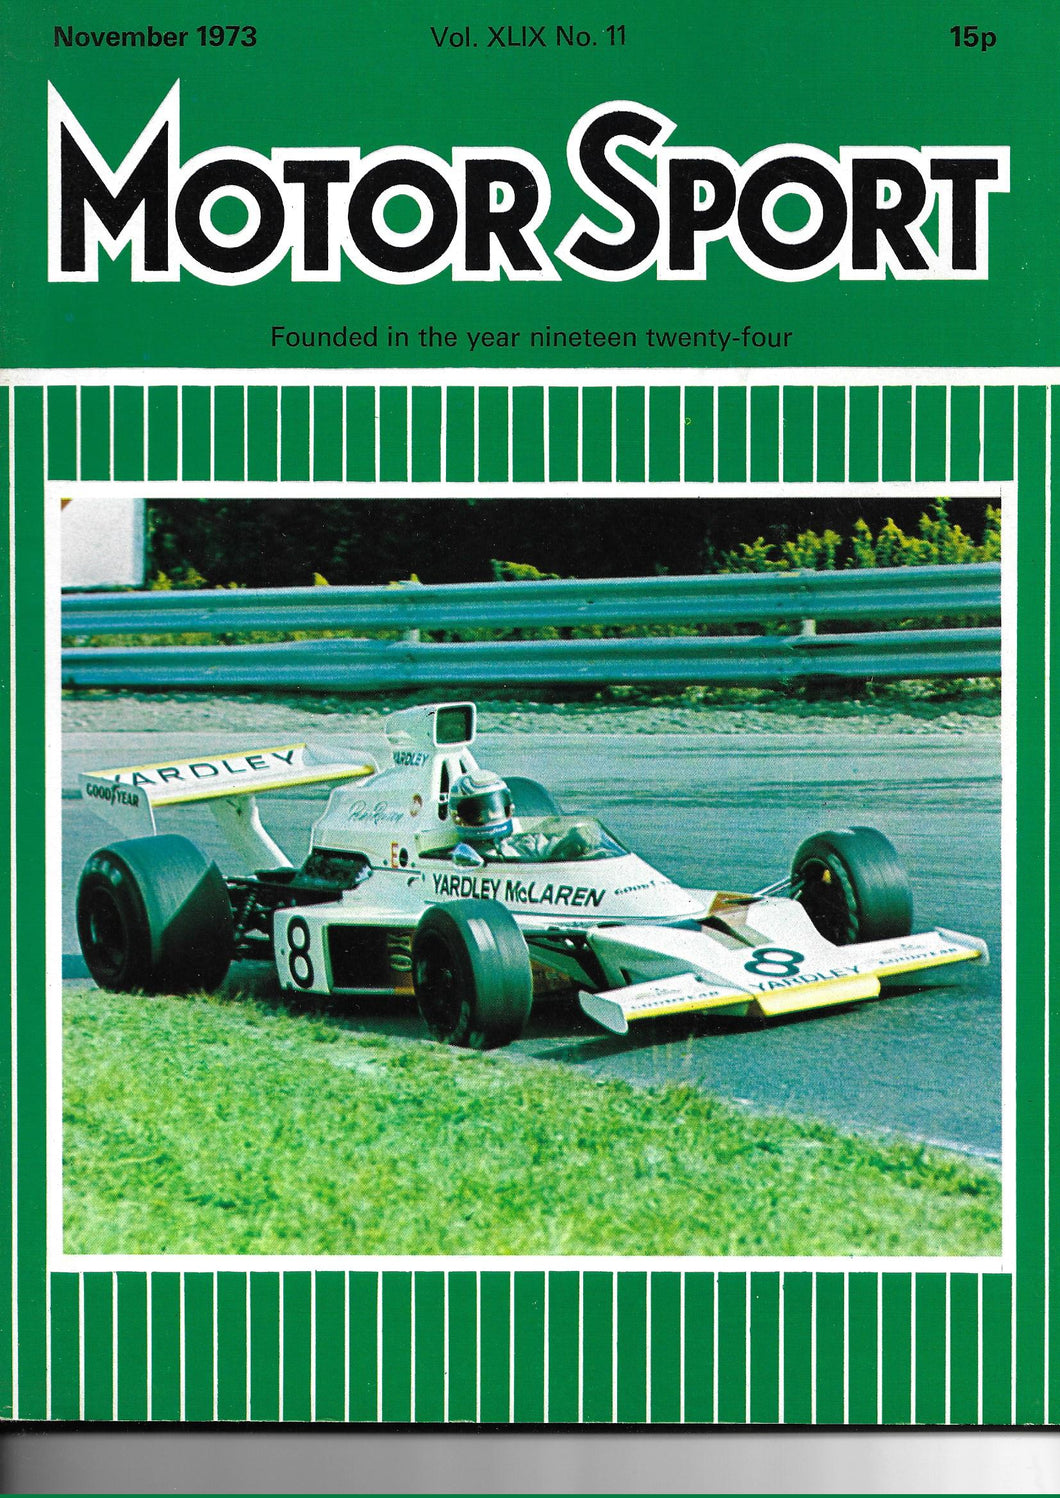 Motor Sport Magazine Vol XLIX No 11 November 1973